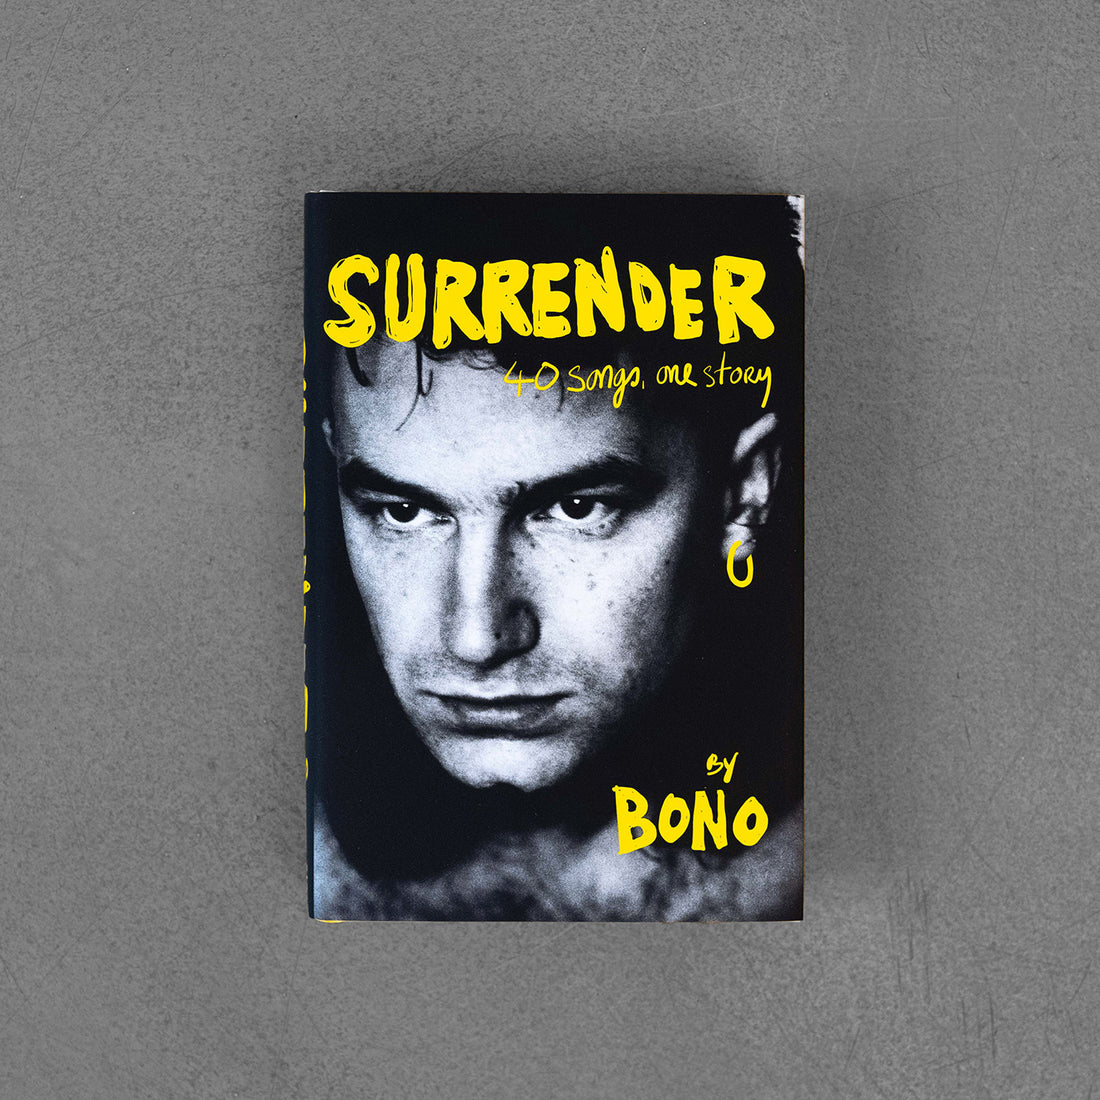 Poddanie się: Autobiografia Bono: 40 piosenek, jedna historia